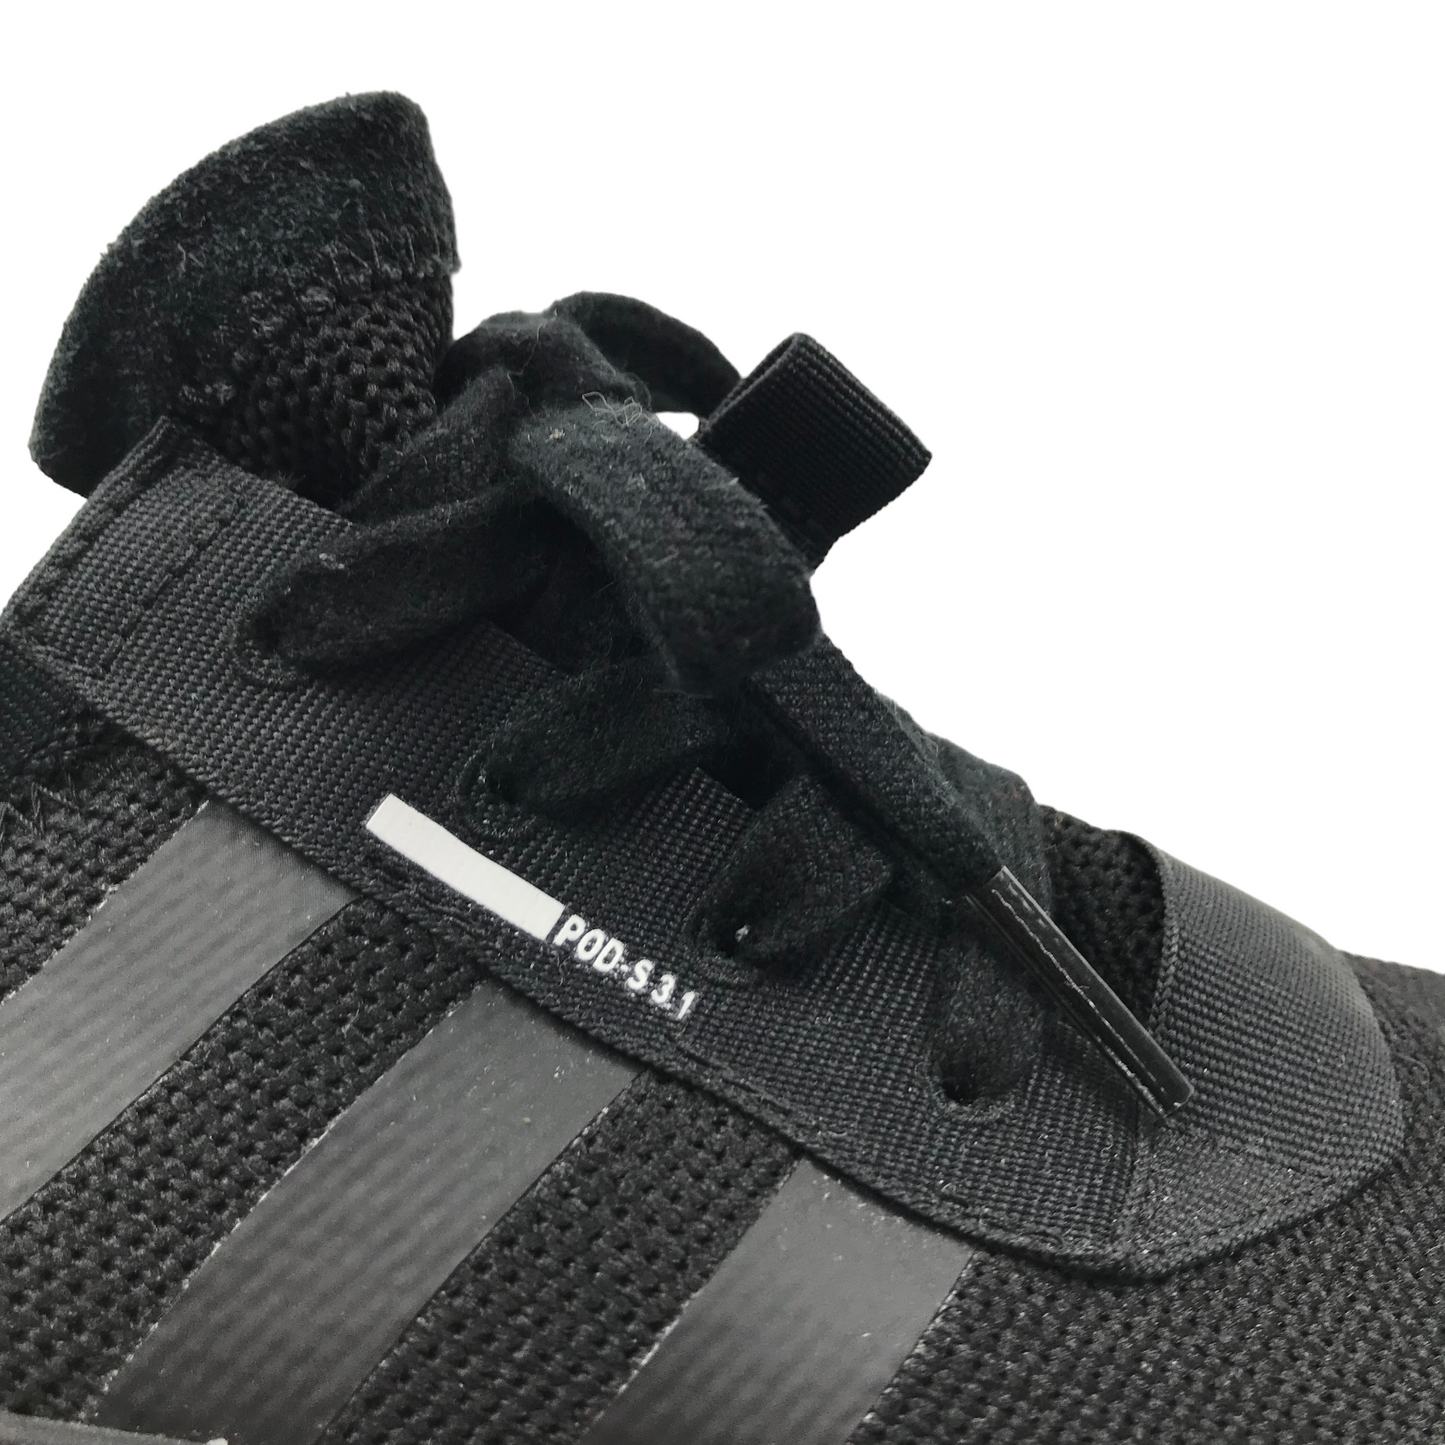 Adidas Pod-s3.1 Black Trainers Shoe Size 5